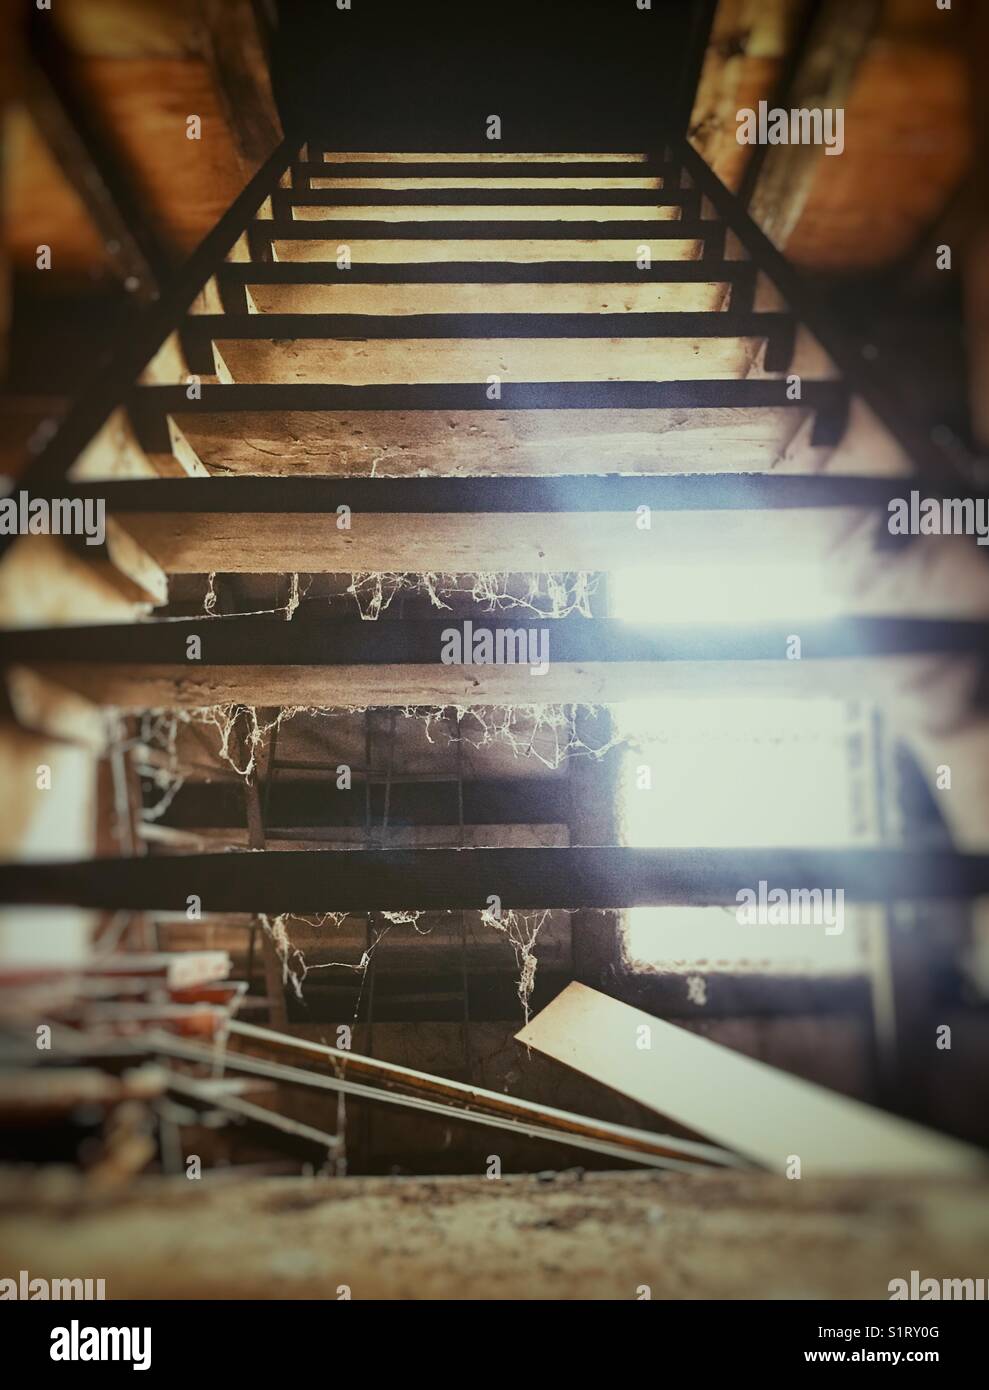 Creepy cobweb covered stairs leading to a dark room. Stock Photo